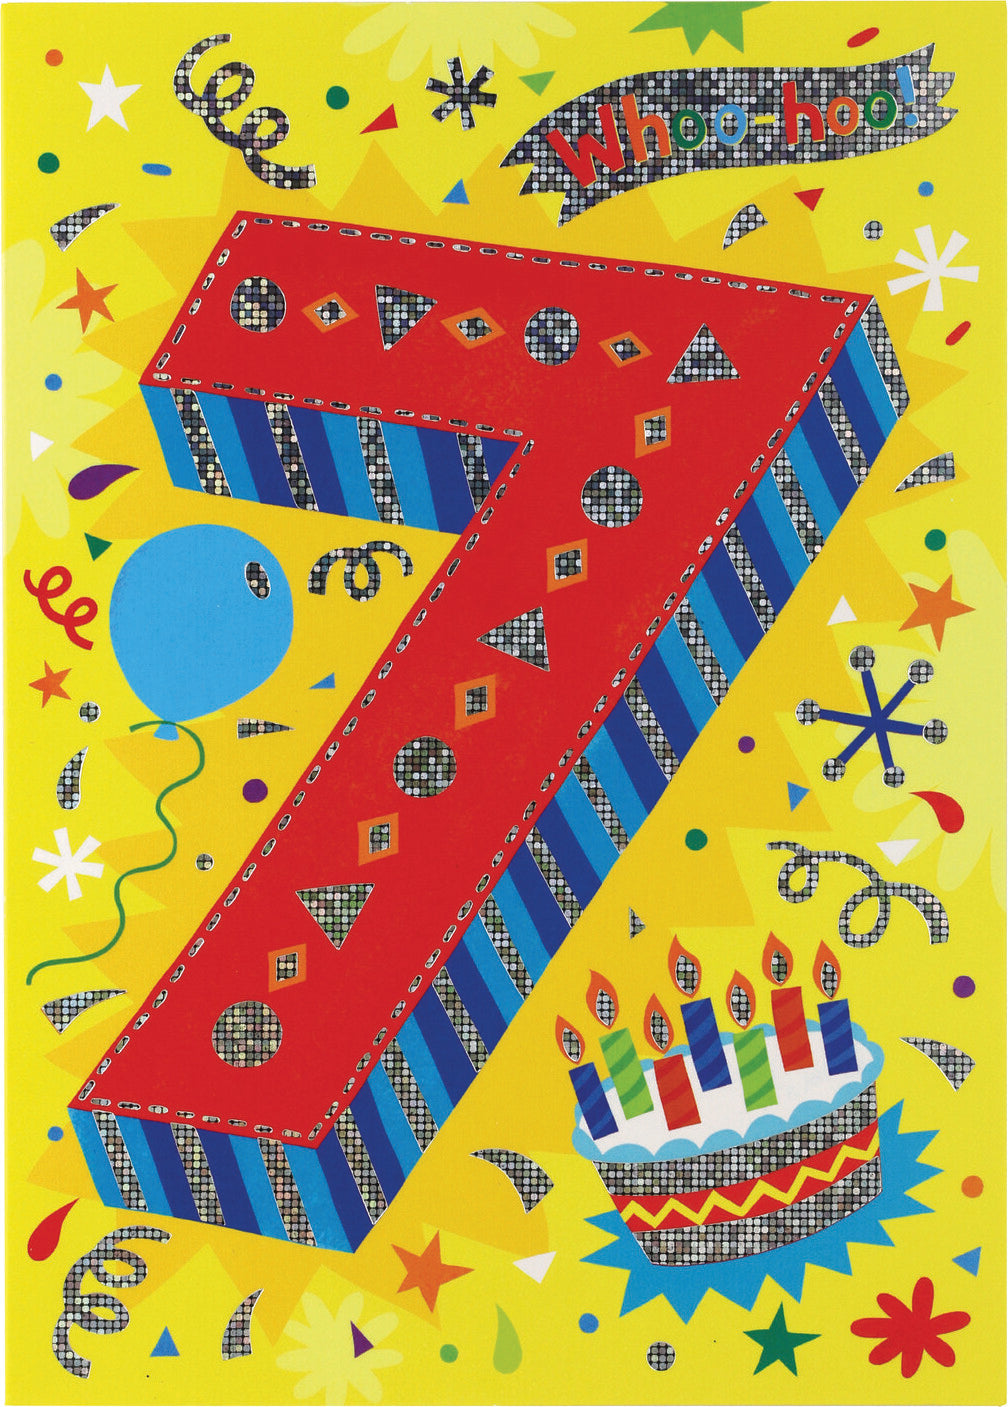 Age 7 Foil Birthday Card